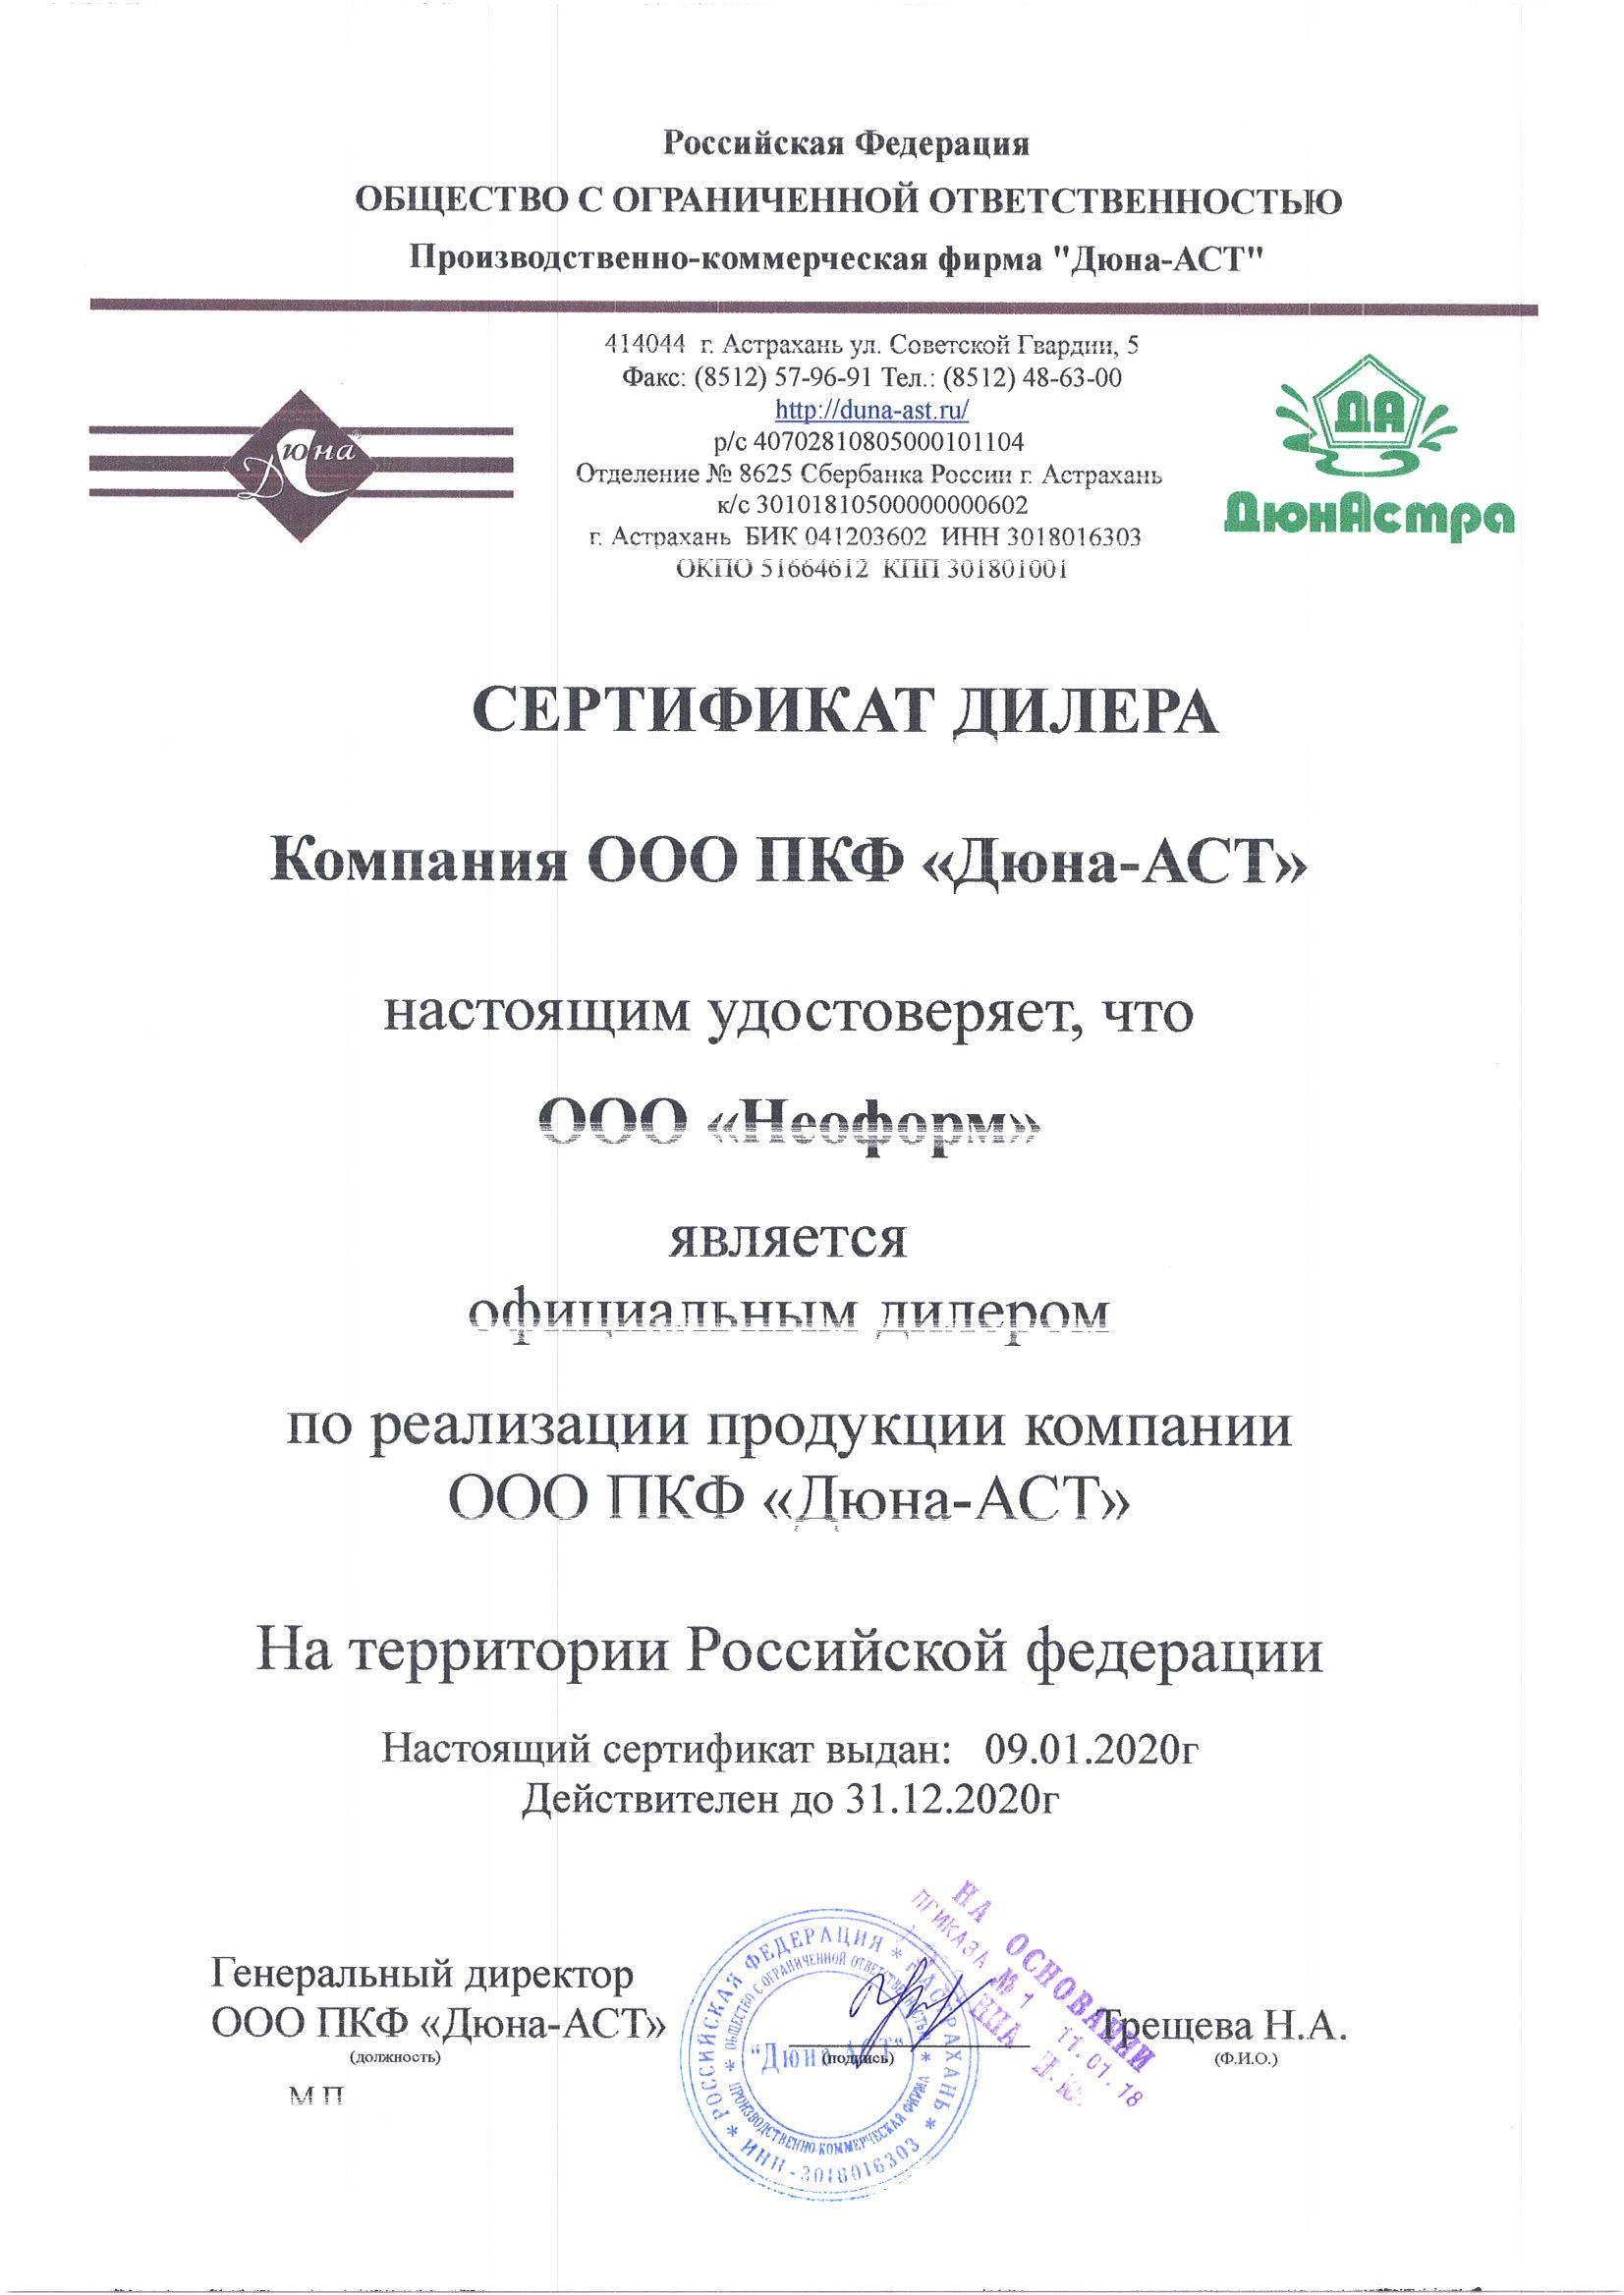 Сертификат дилера Дюна